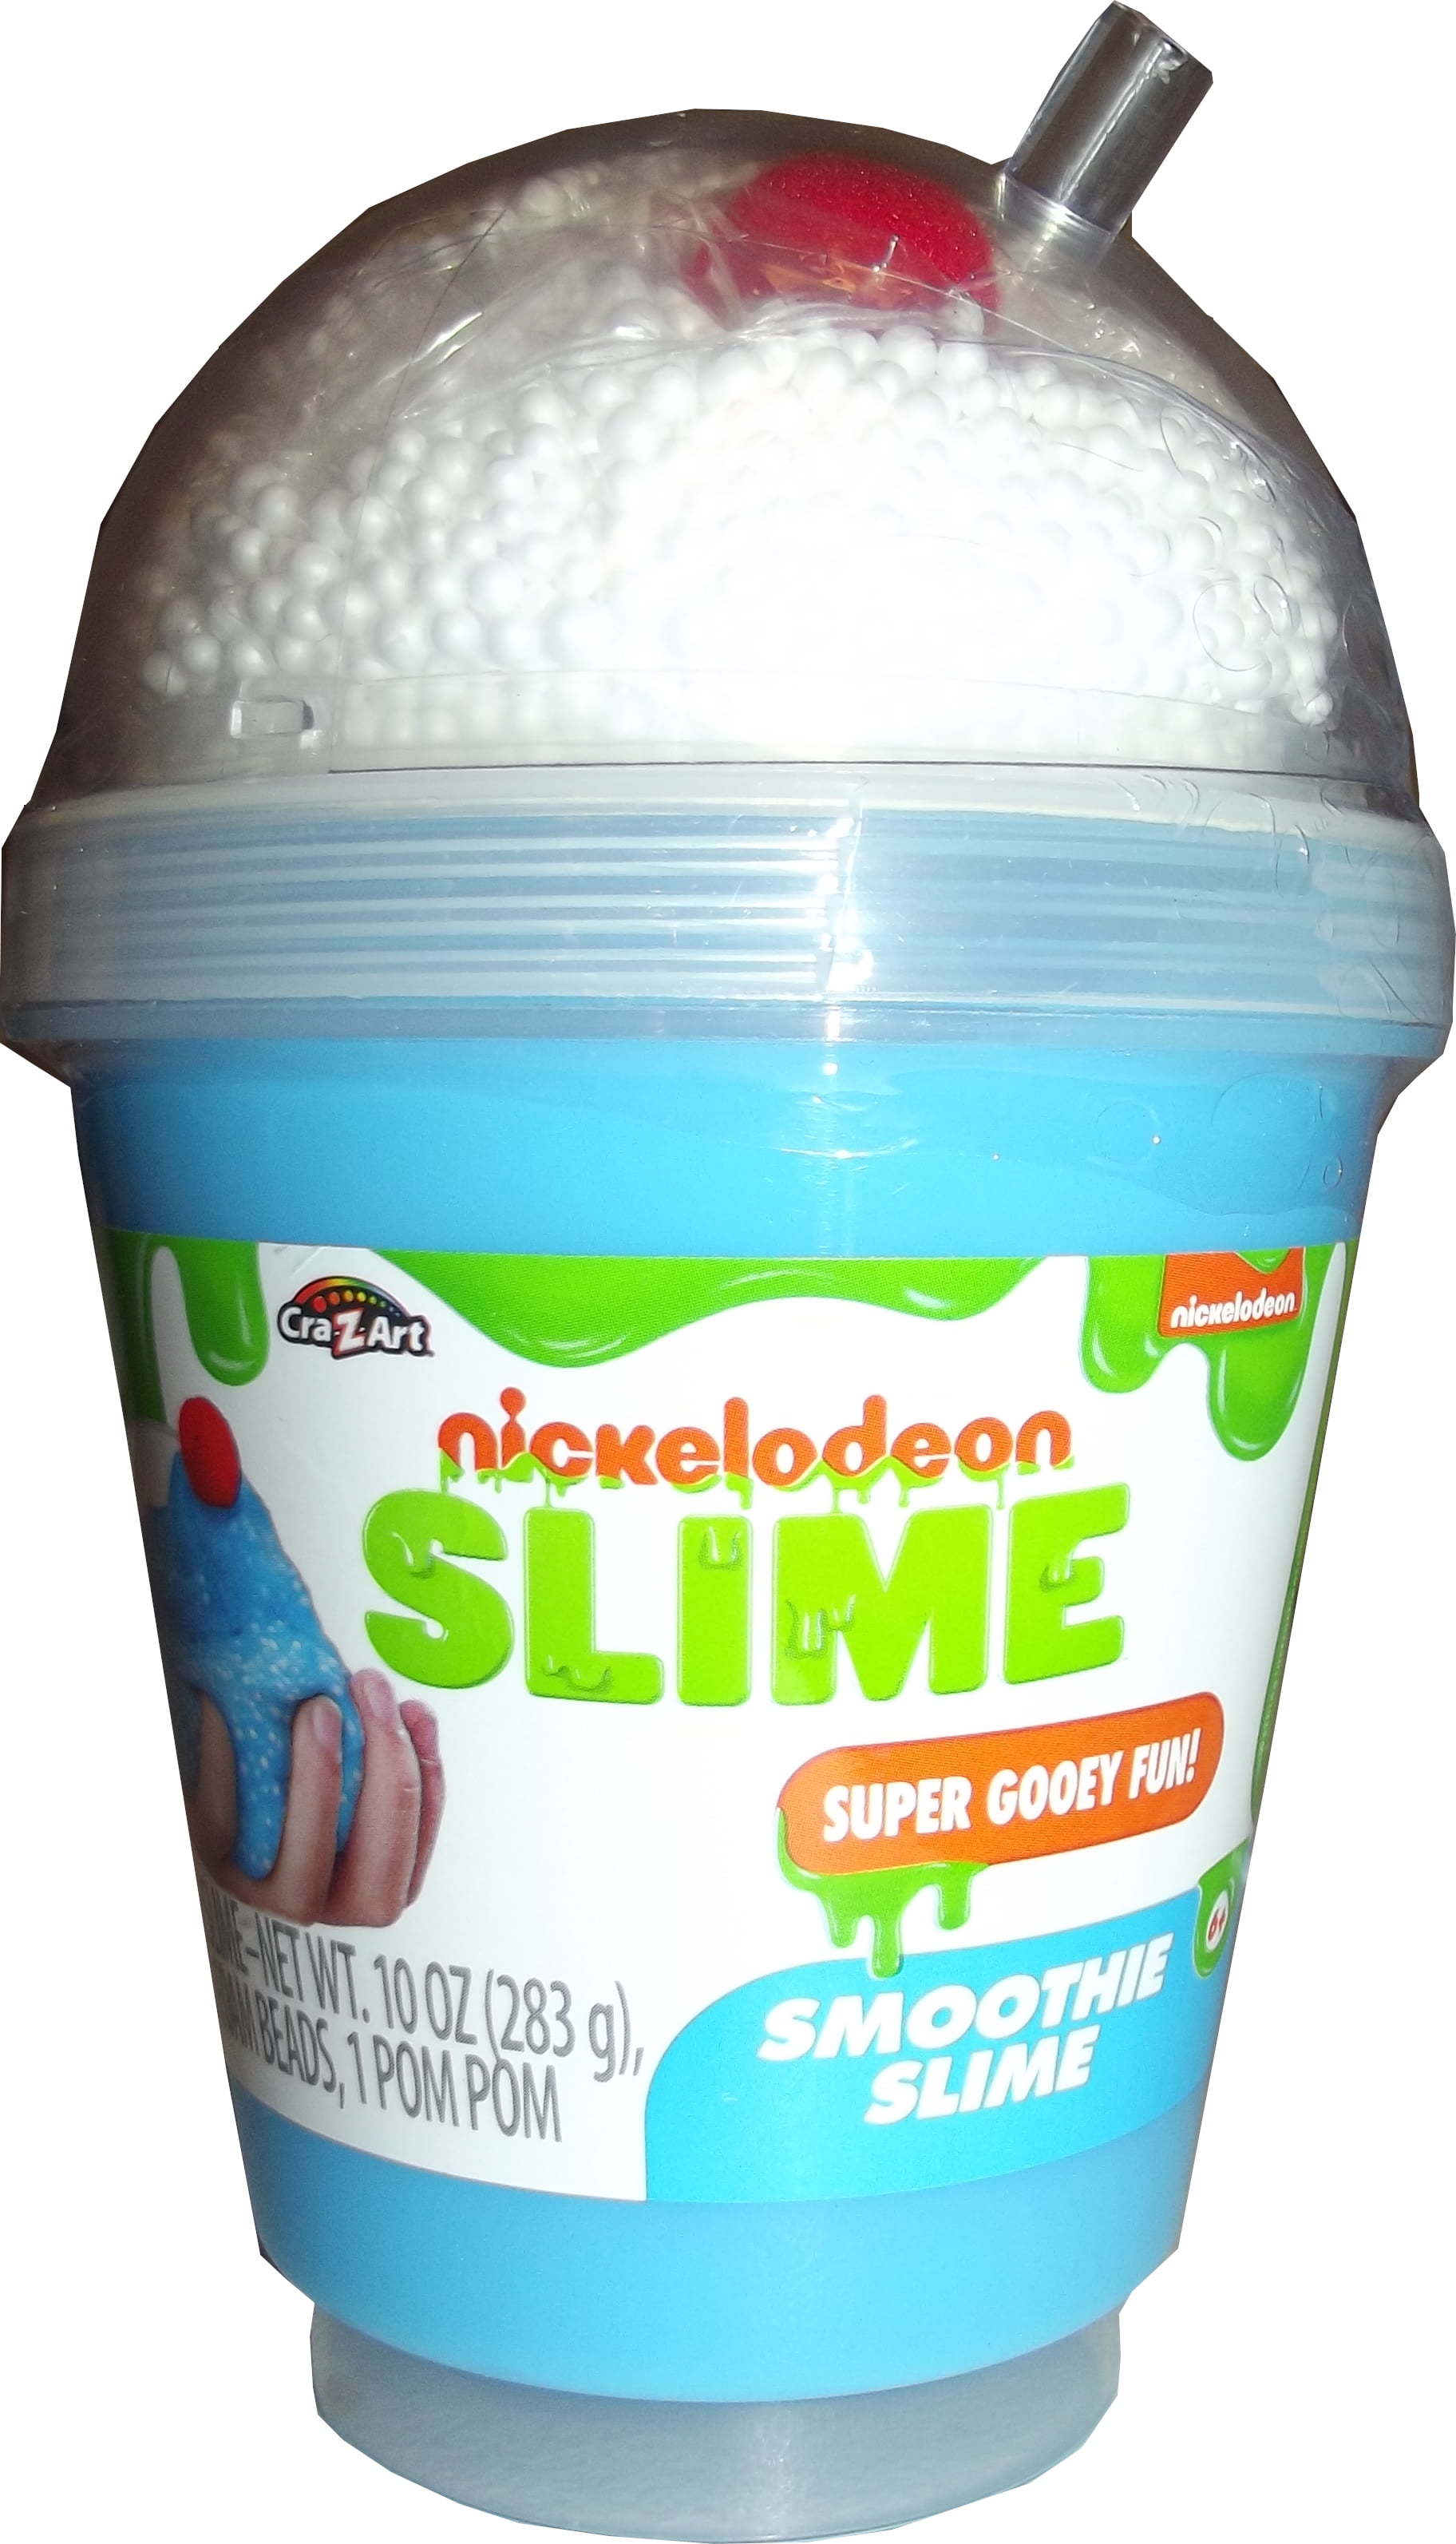 cra-z-art-nickelodeon-slime-smoothie-slime-walmart-walmart